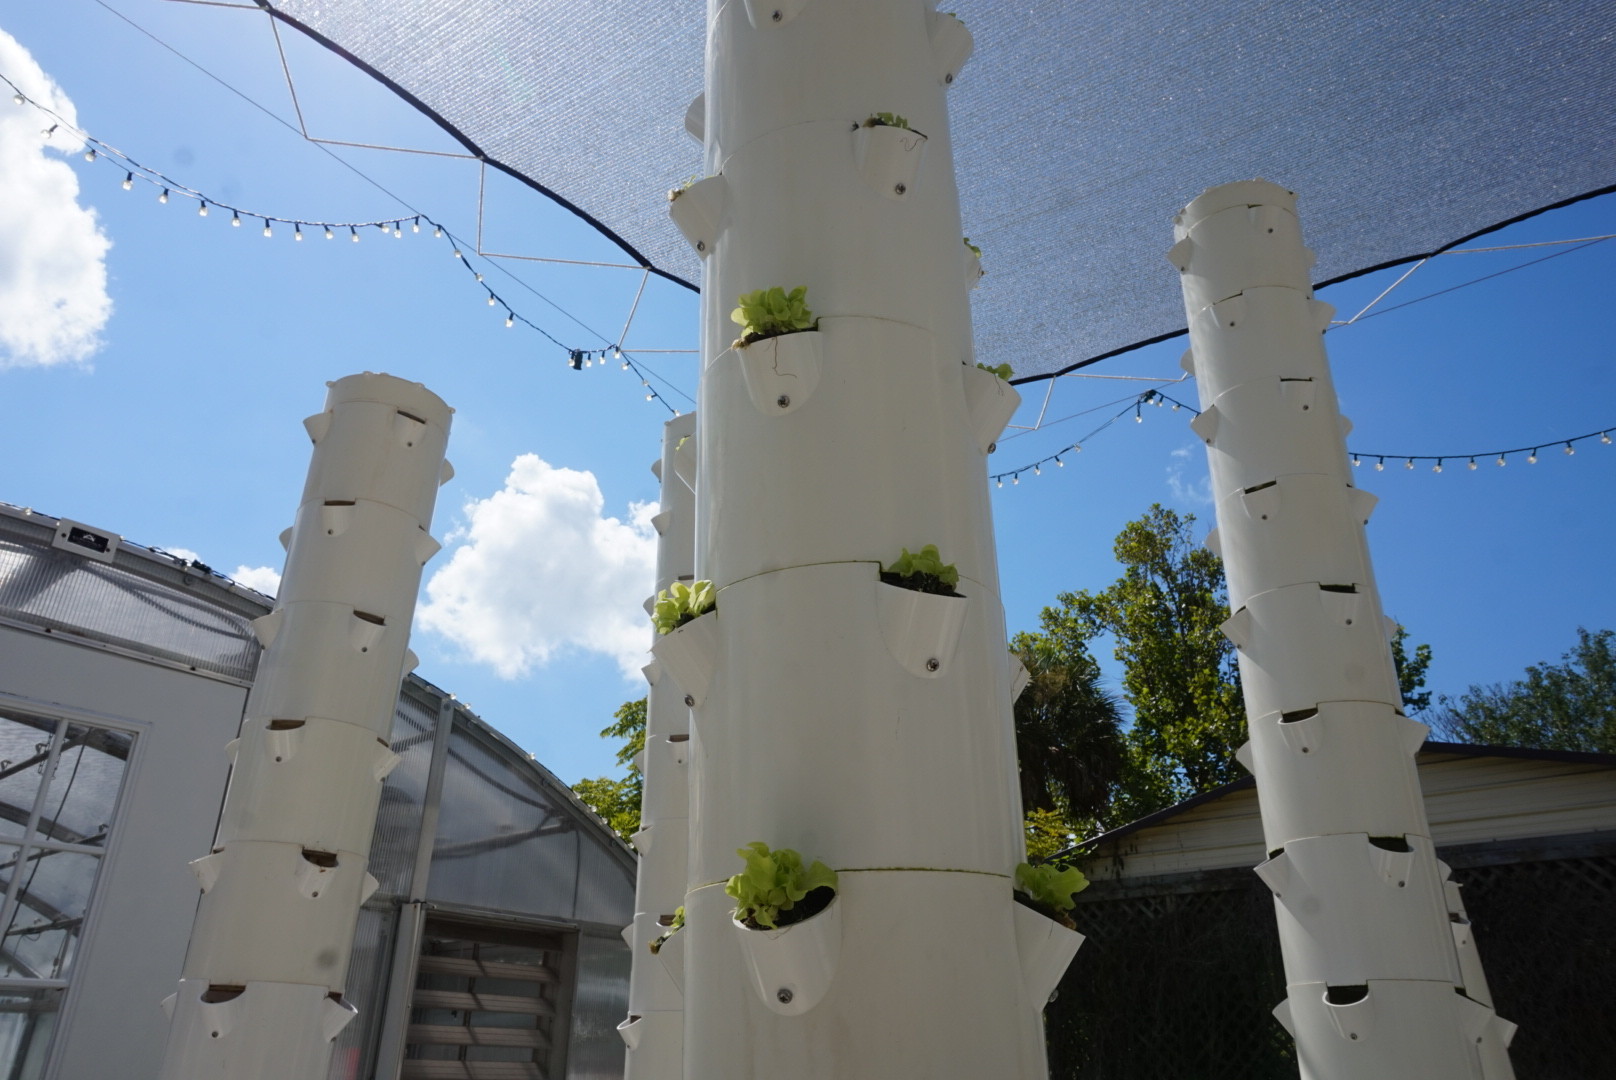 Aeroponic vertical growing towers